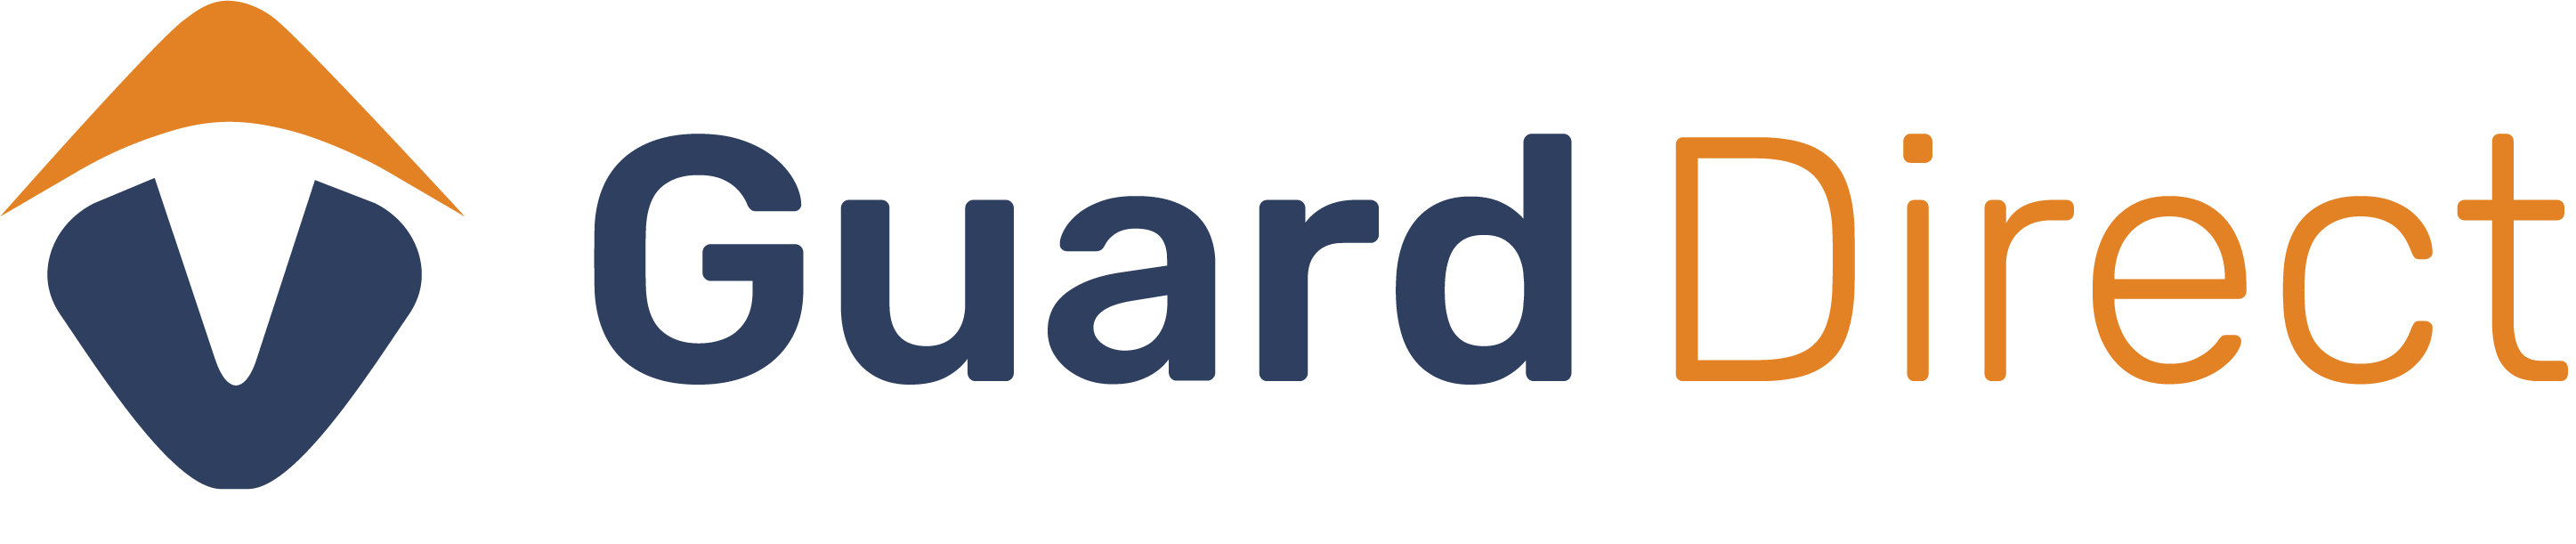 Guard direct logo